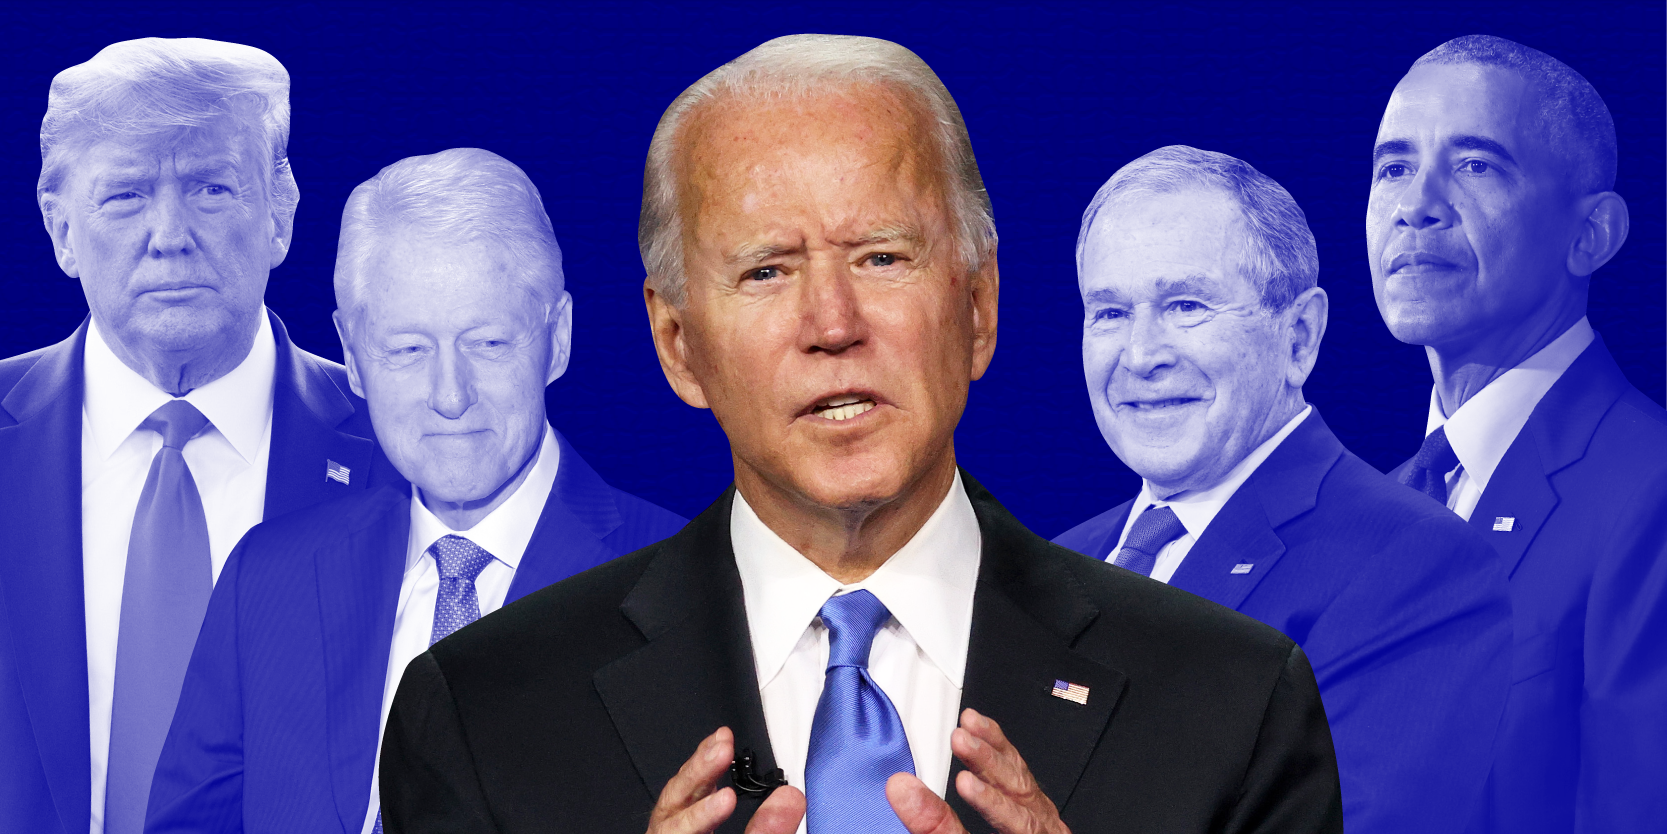 Donald Trump, Bill Clinton, Joe Biden, George Bush, and Barack Obama on a blue background.